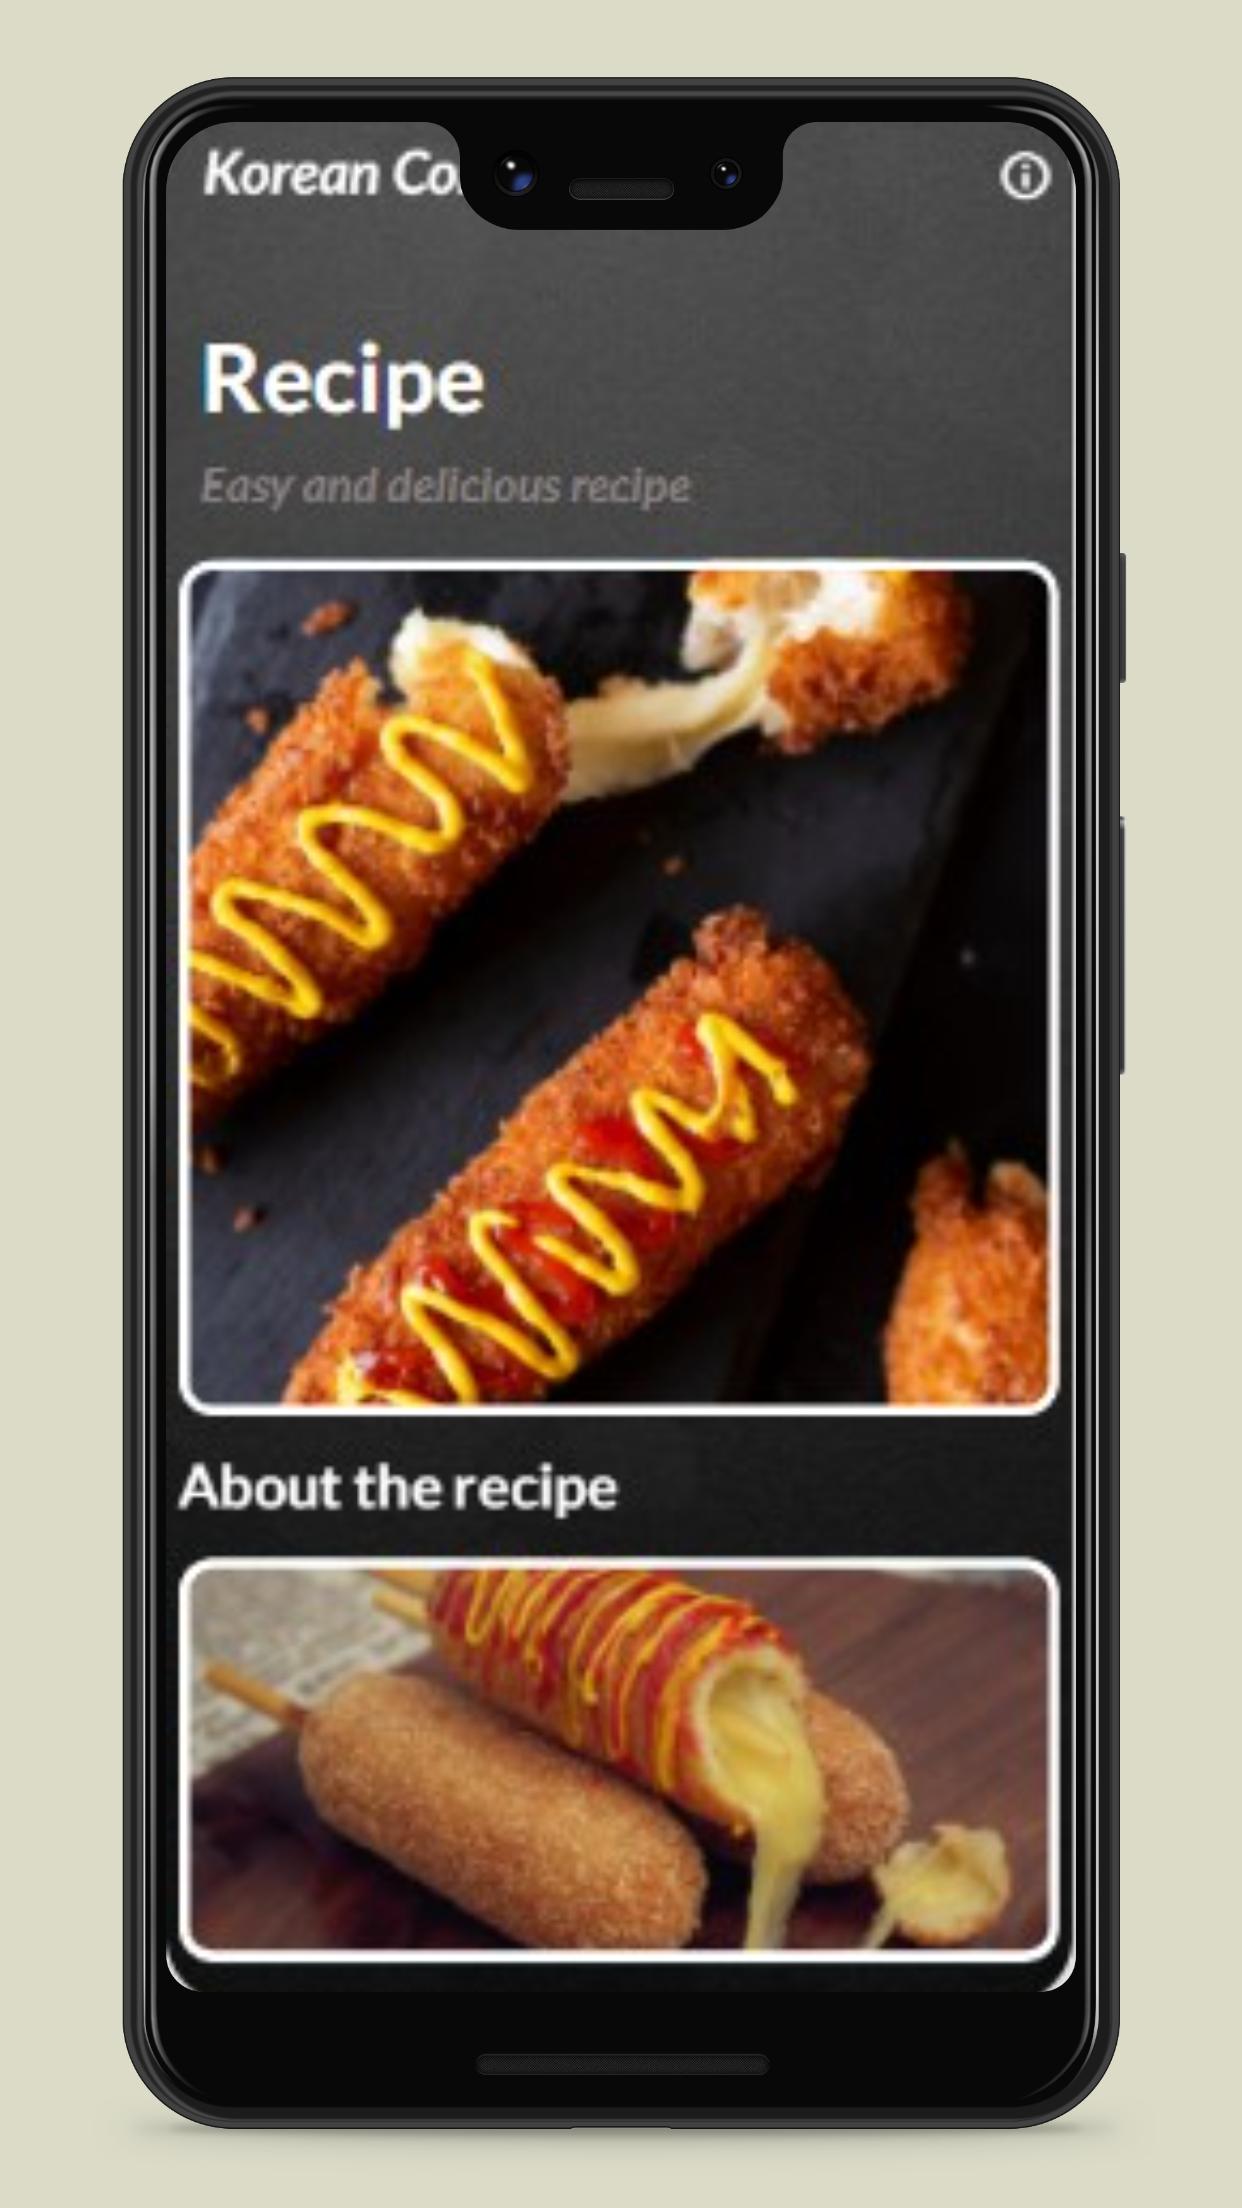 korean corn dog recipe 1.0.0 Screenshot 1